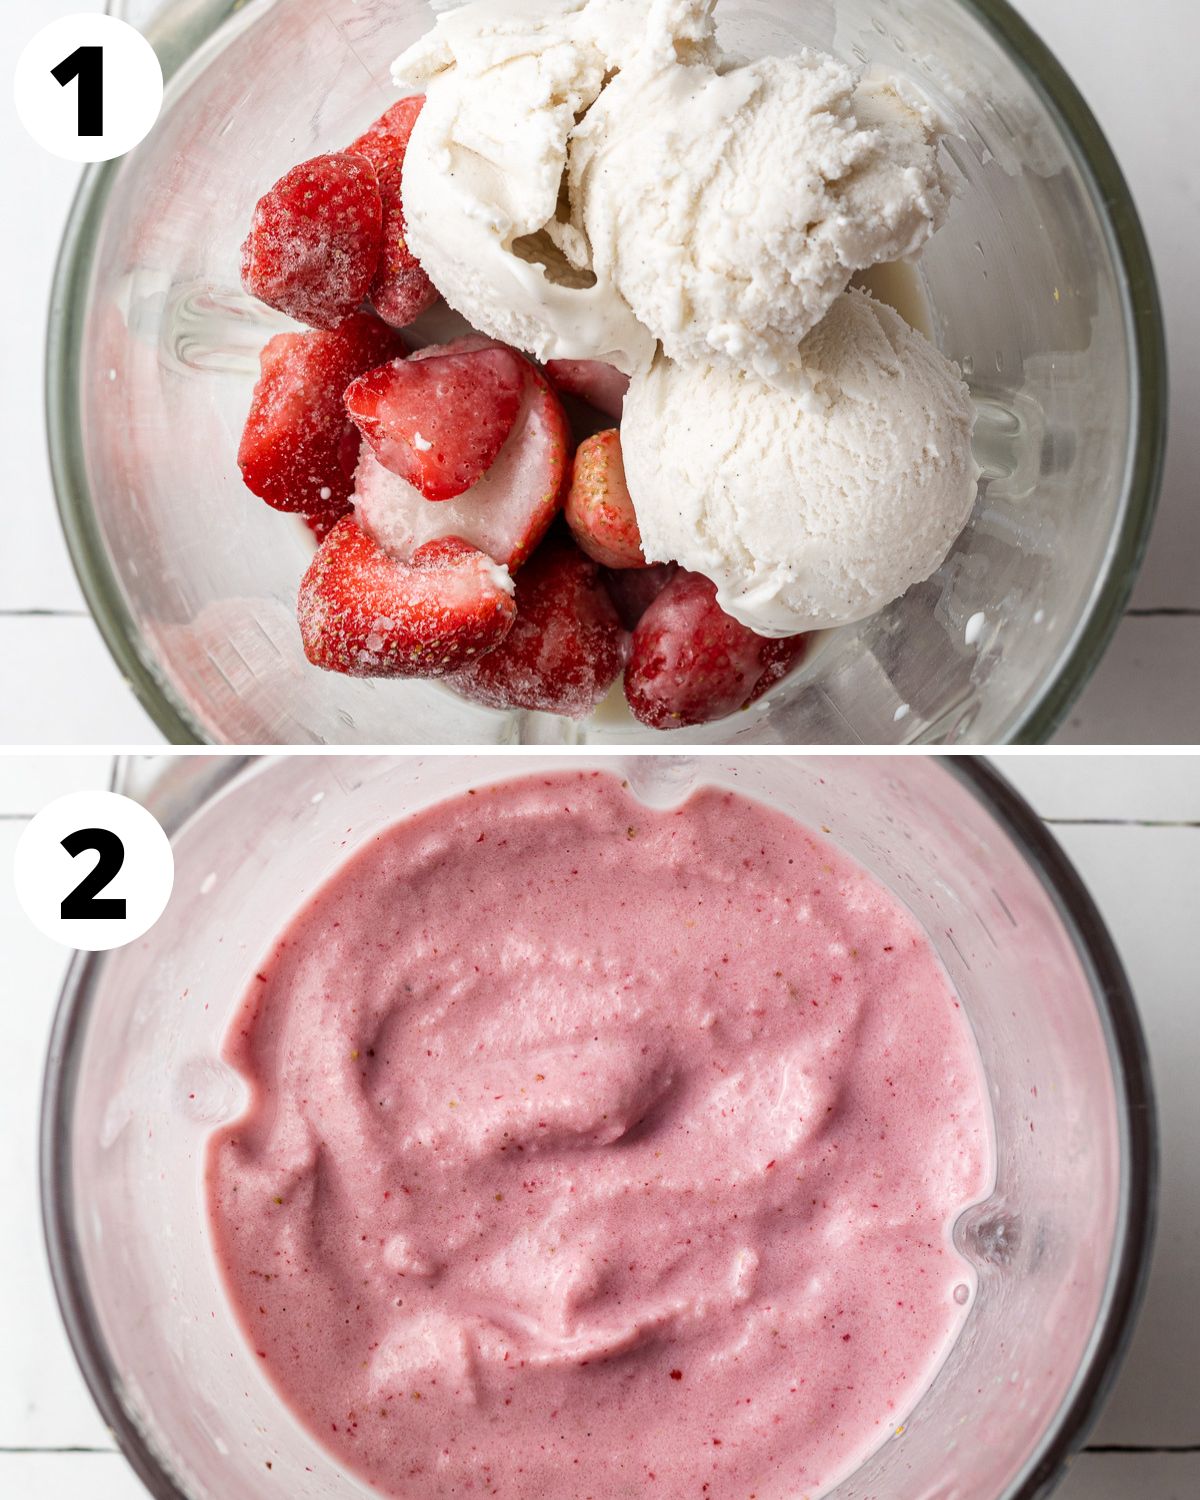 Strawberry banana milkshake instructions in two steps